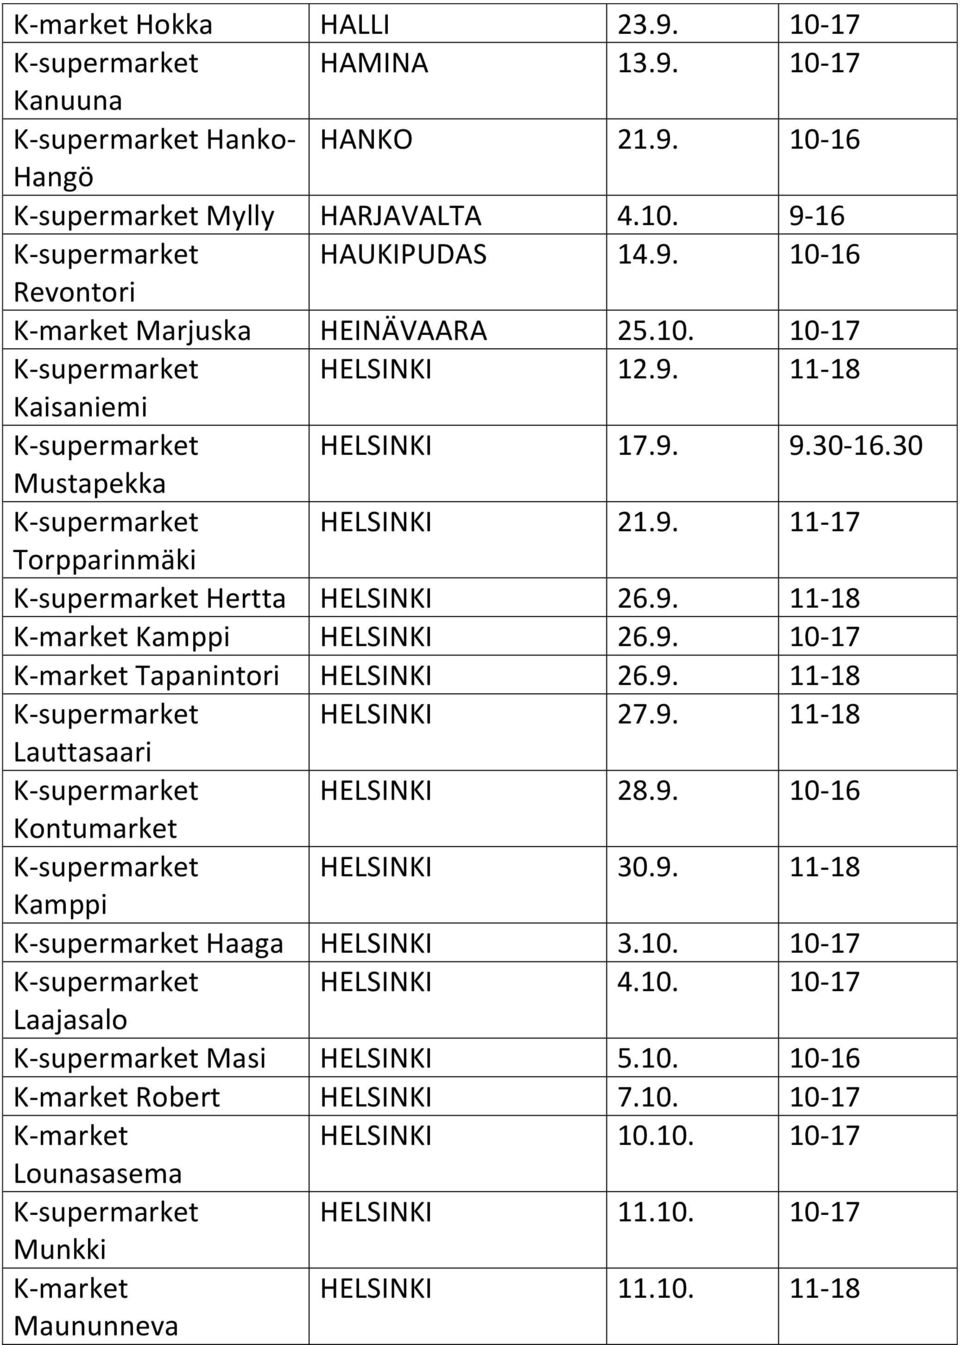 9. 10-17 K-market Tapanintori HELSINKI 26.9. 11-18 K-supermarket HELSINKI 27.9. 11-18 Lauttasaari K-supermarket HELSINKI 28.9. 10-16 Kontumarket K-supermarket HELSINKI 30.9. 11-18 Kamppi K-supermarket Haaga HELSINKI 3.